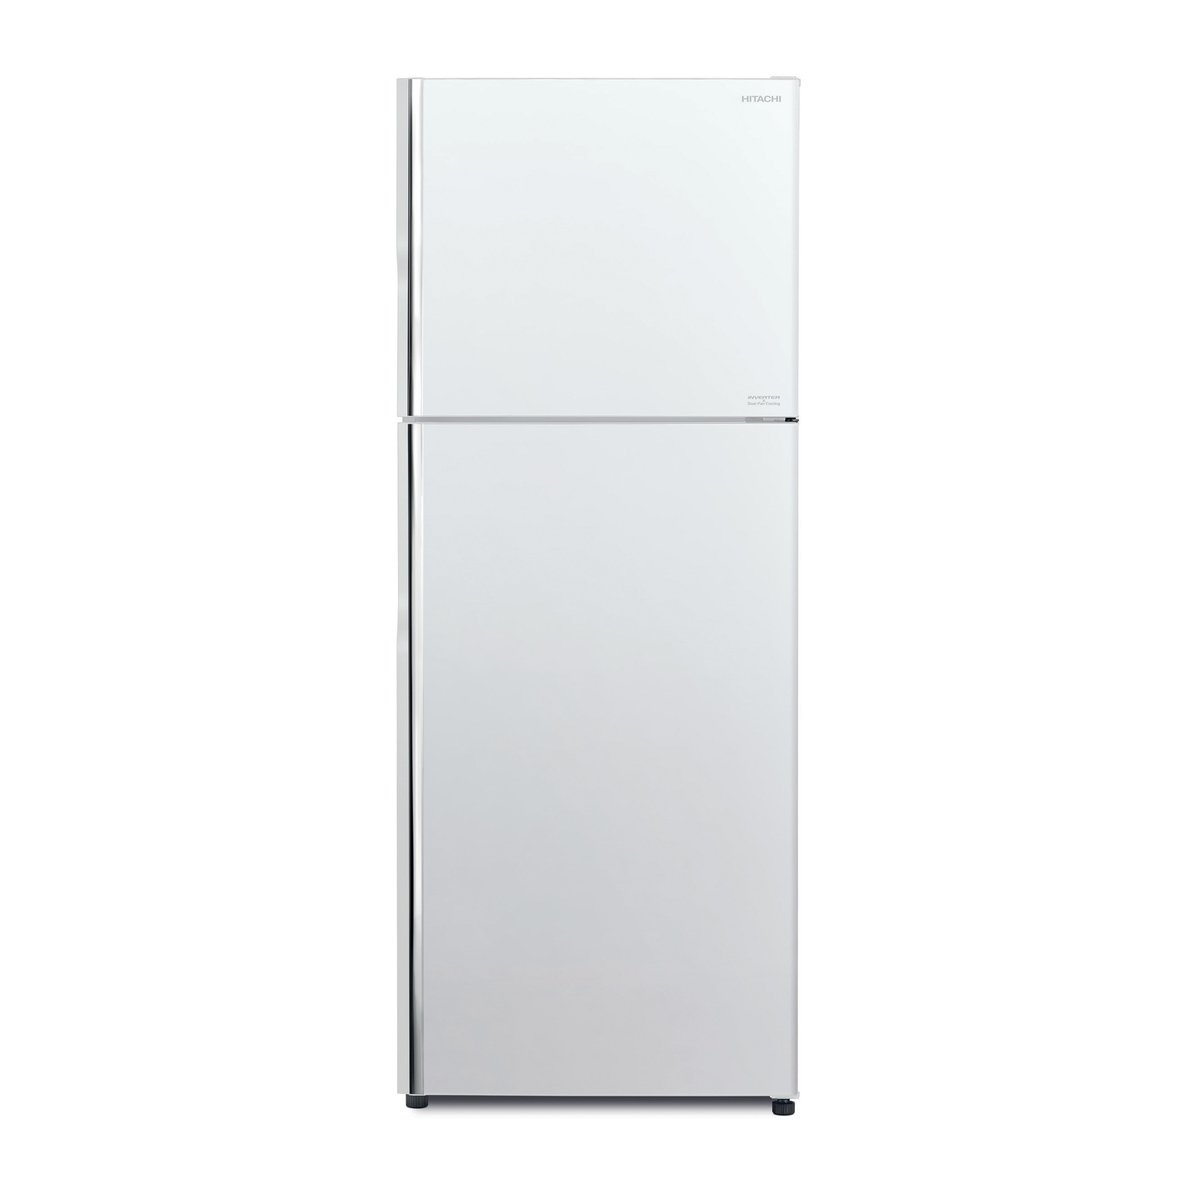 Hitachi Double Door Refrigerator RVX550PK9KPWH 407LTR